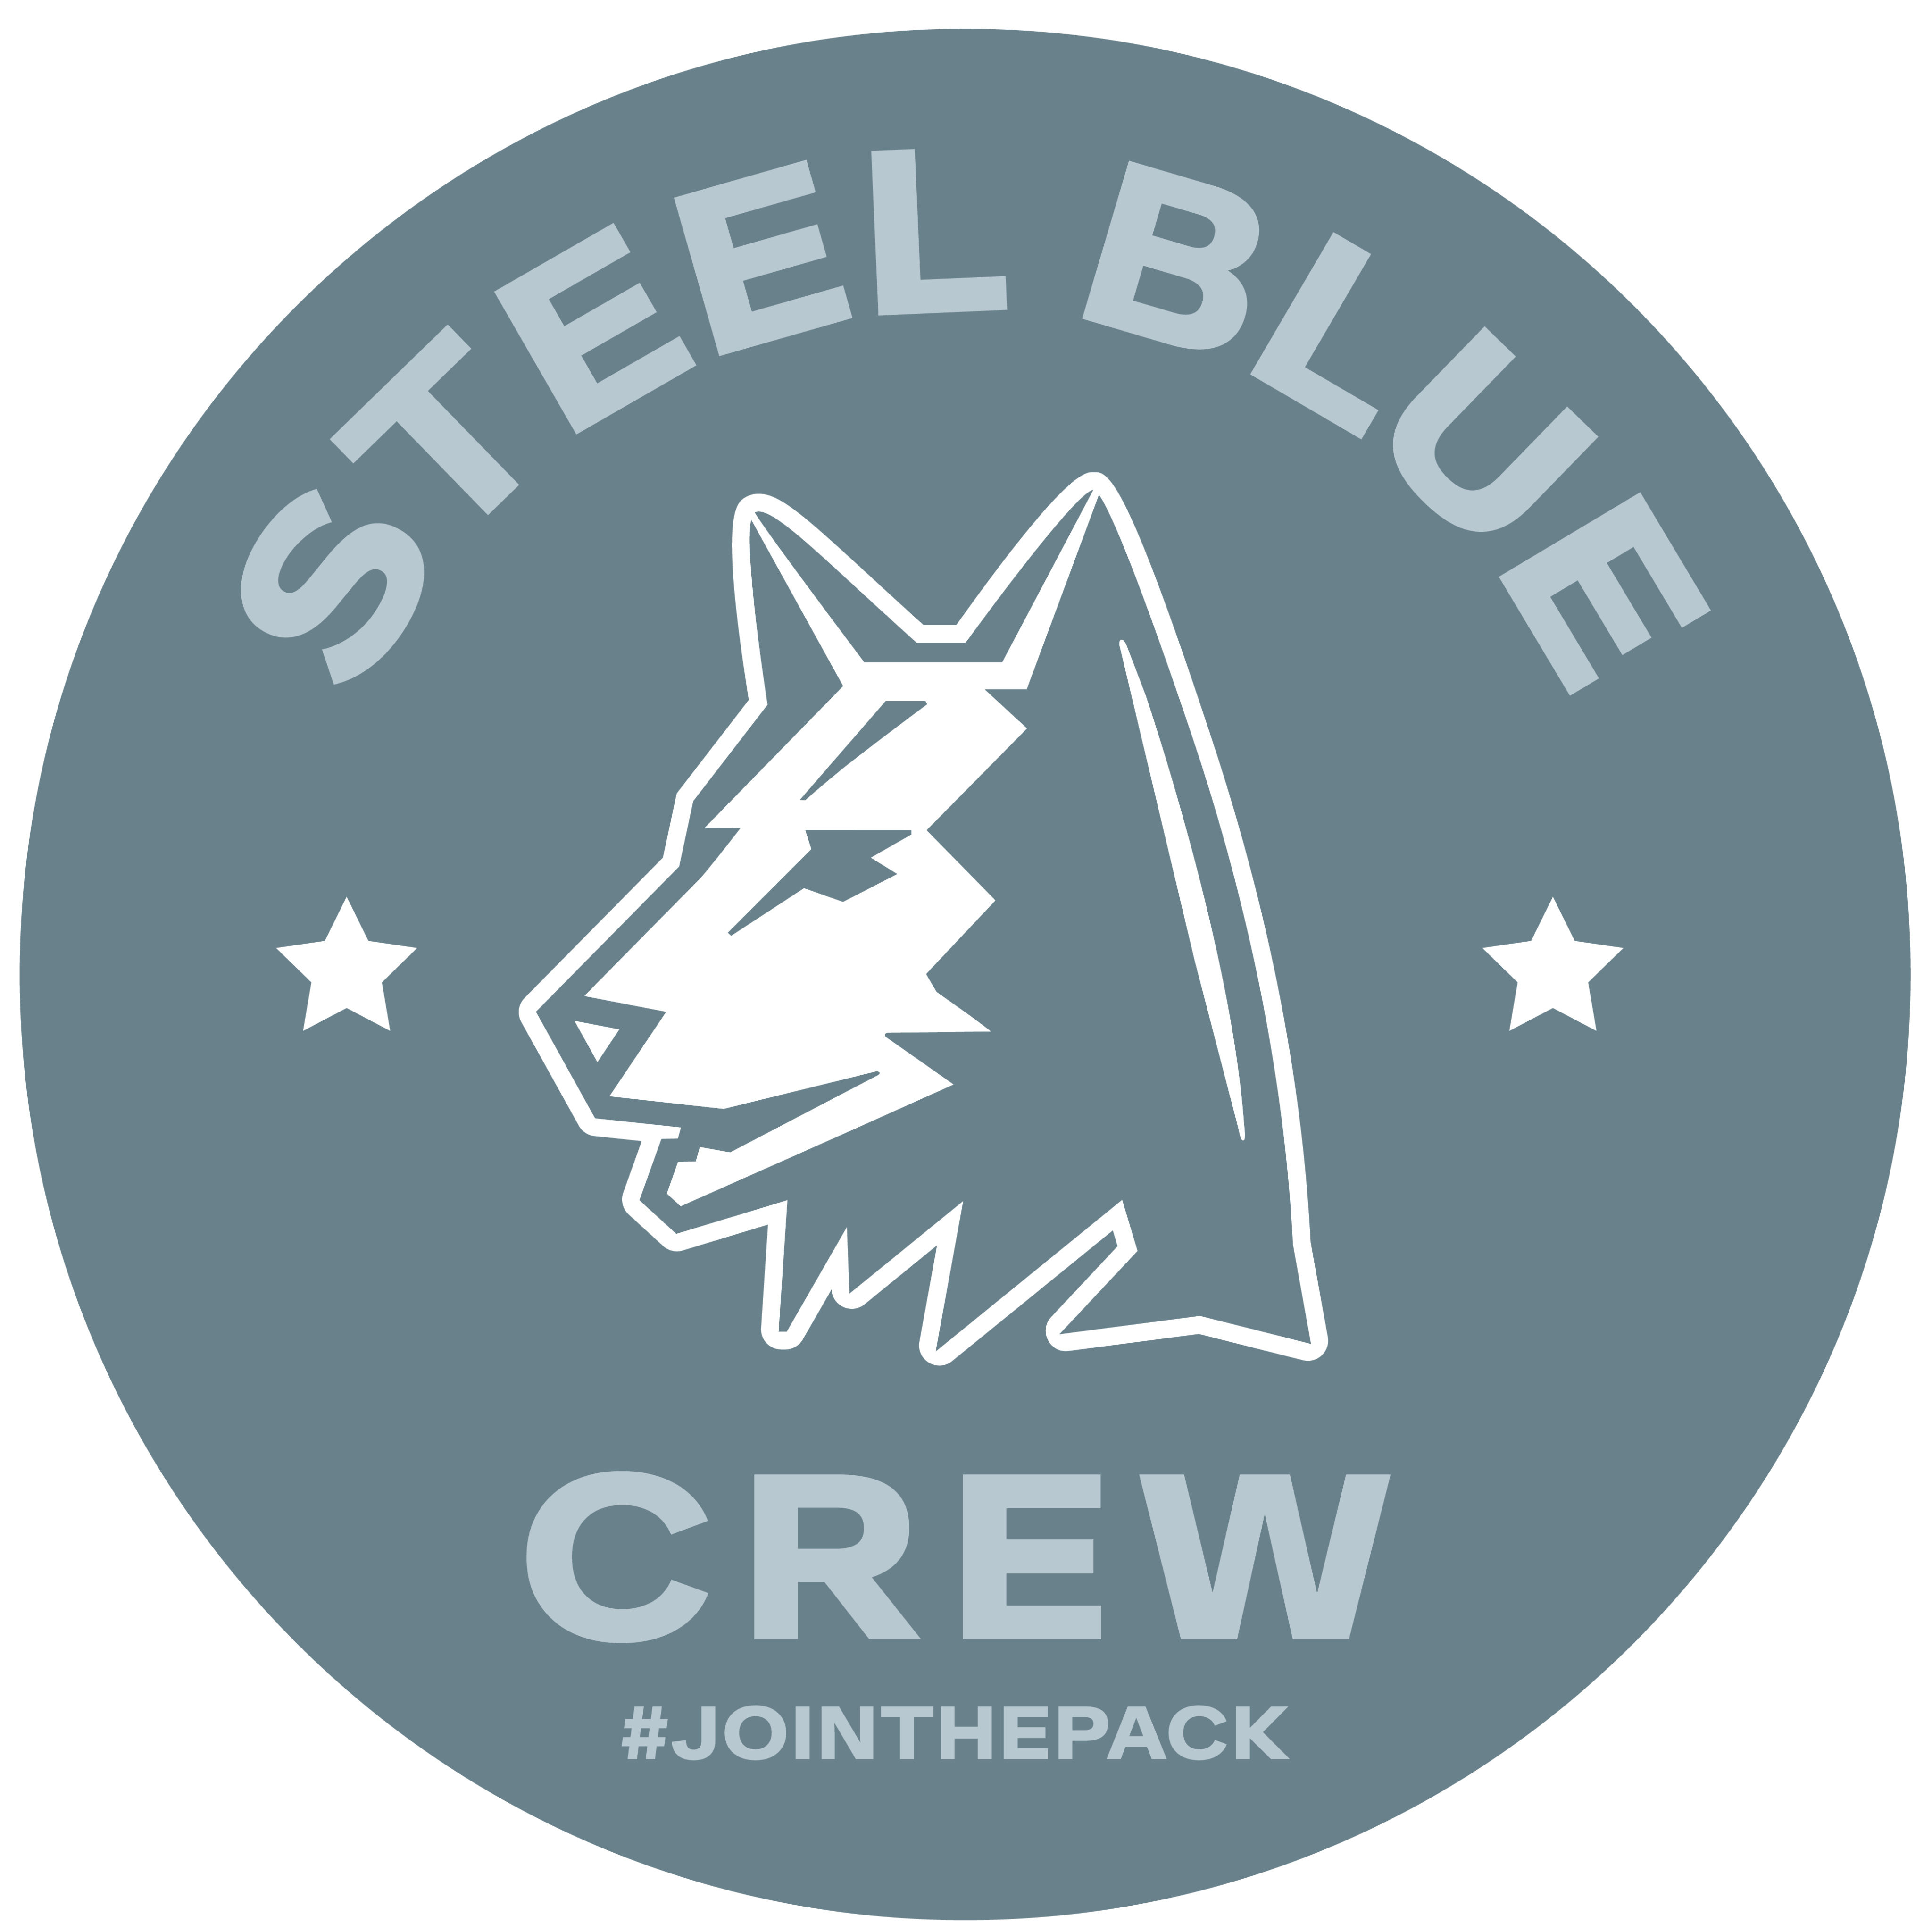  Steel Blue crew jointhepack 